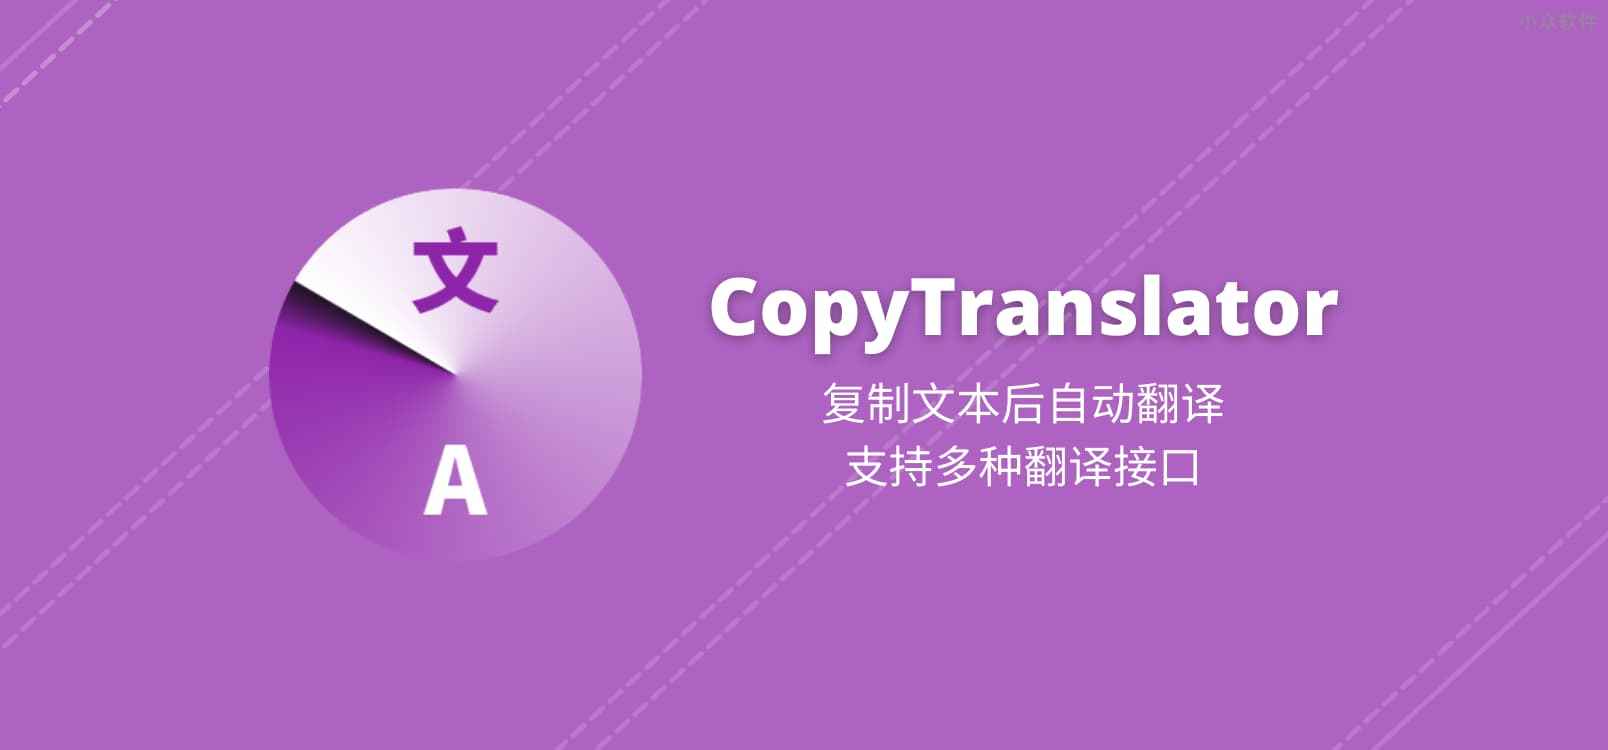 CopyTranslator - 复制文本后自动翻译，支持多种翻译接口